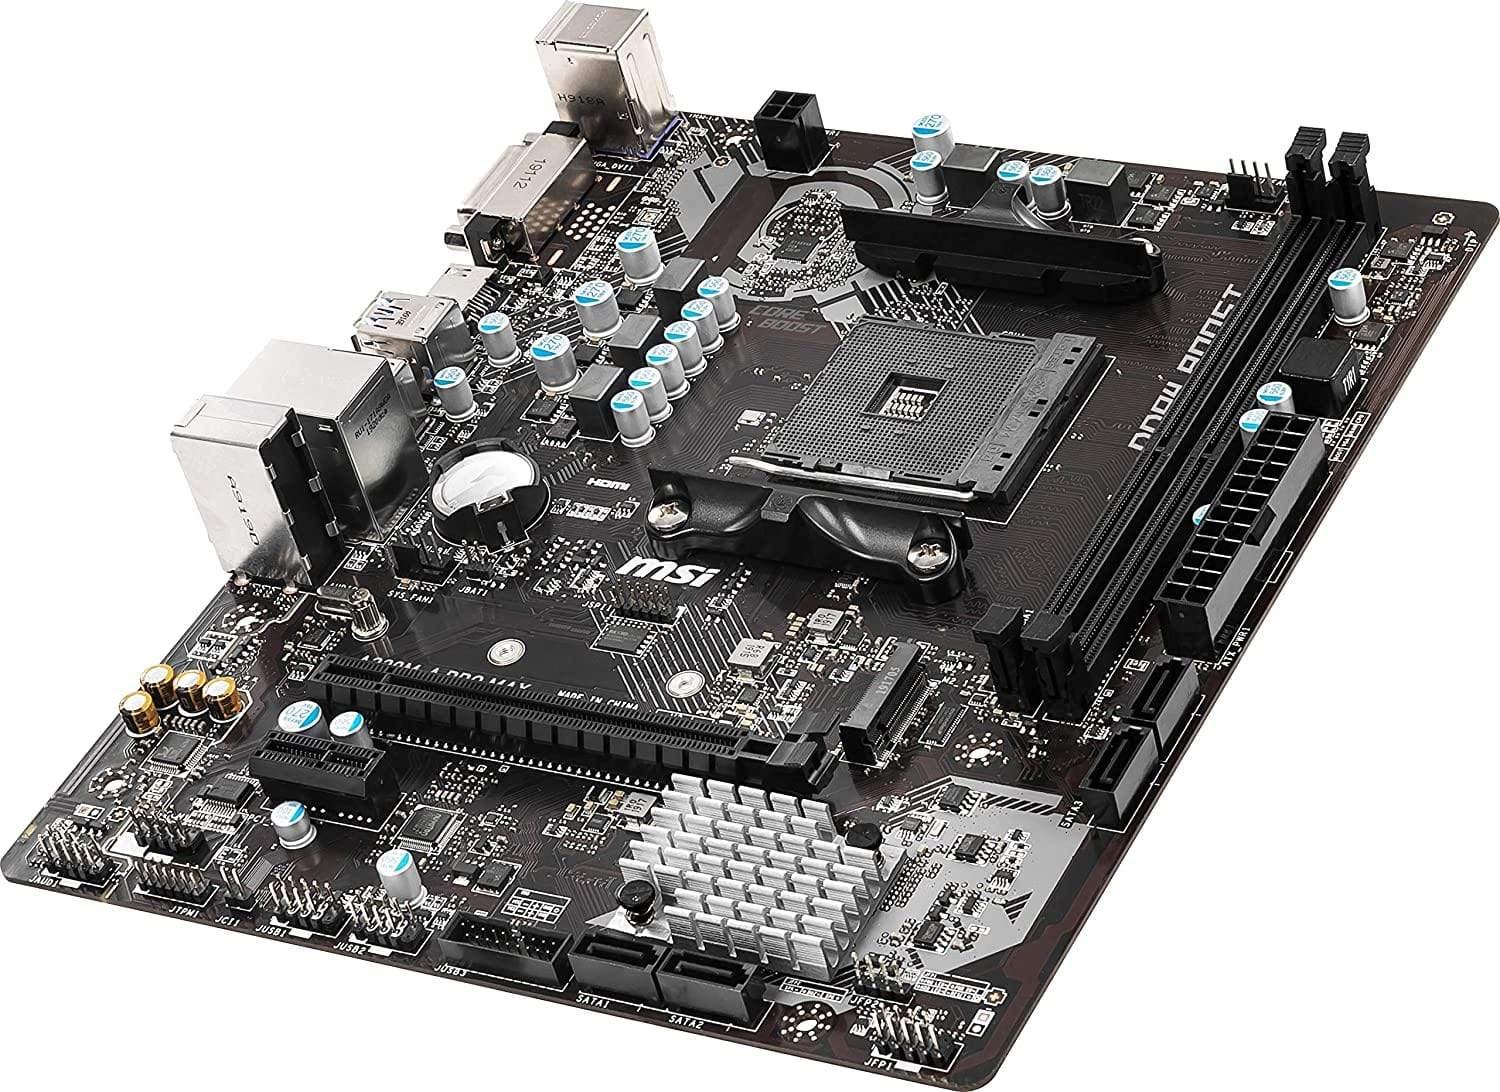 MSI ProSeries AMD A320 1st, 2nd, 3rd Gen ATX Motherboard-Motherboard-dealsplant